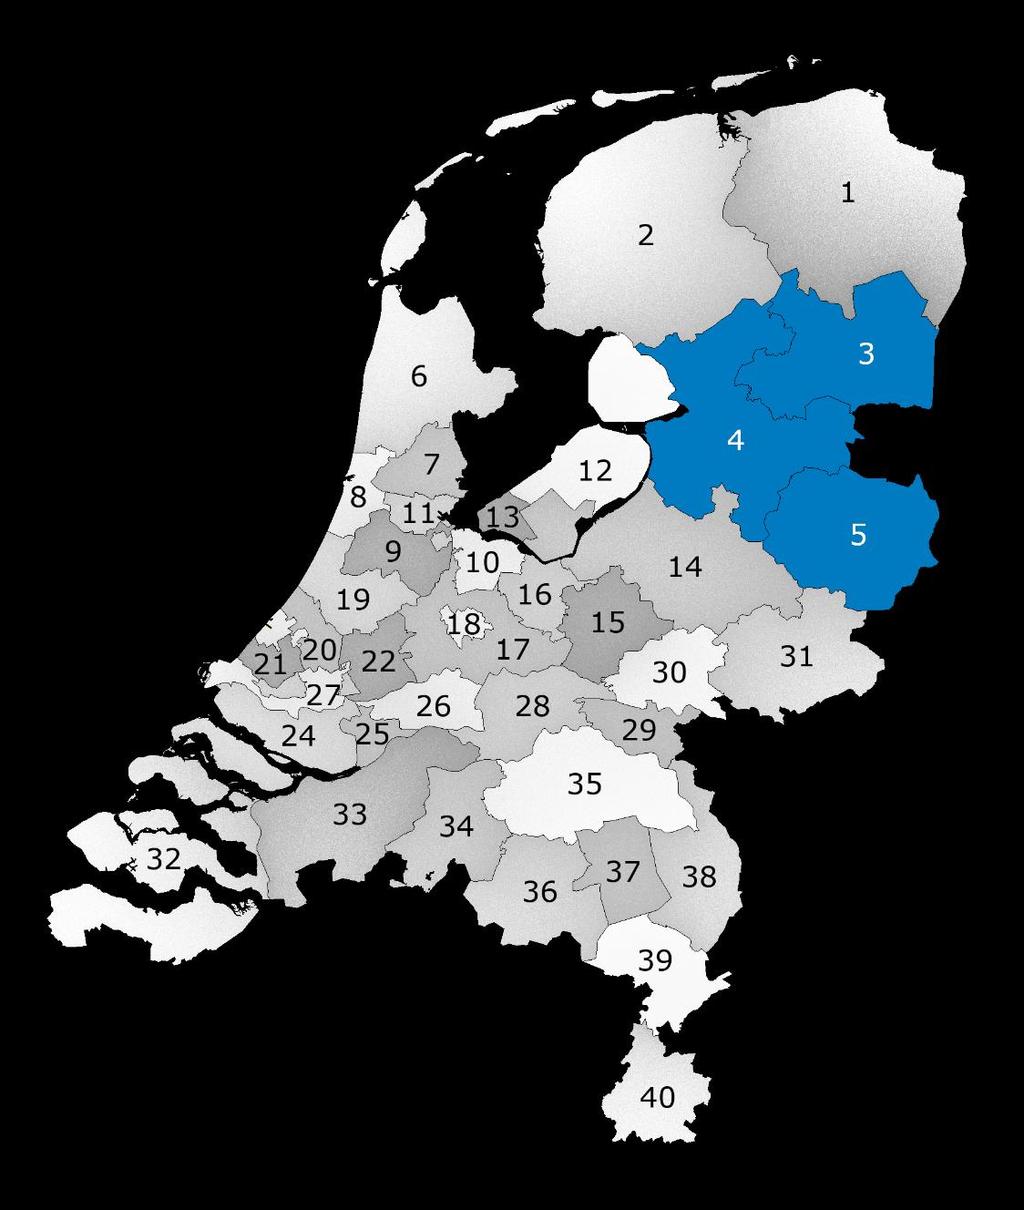 A Arbeidsmarktregioindeling 1 Groningen 21 Haaglanden 2 Friesland 22 Midden-Holland 3 Drenthe 23 's-gravenhage 4 Regio Zwolle 24 Rijnmond 5 Twente 25 Drechtsteden 6 Noord-Holland-Noord 26